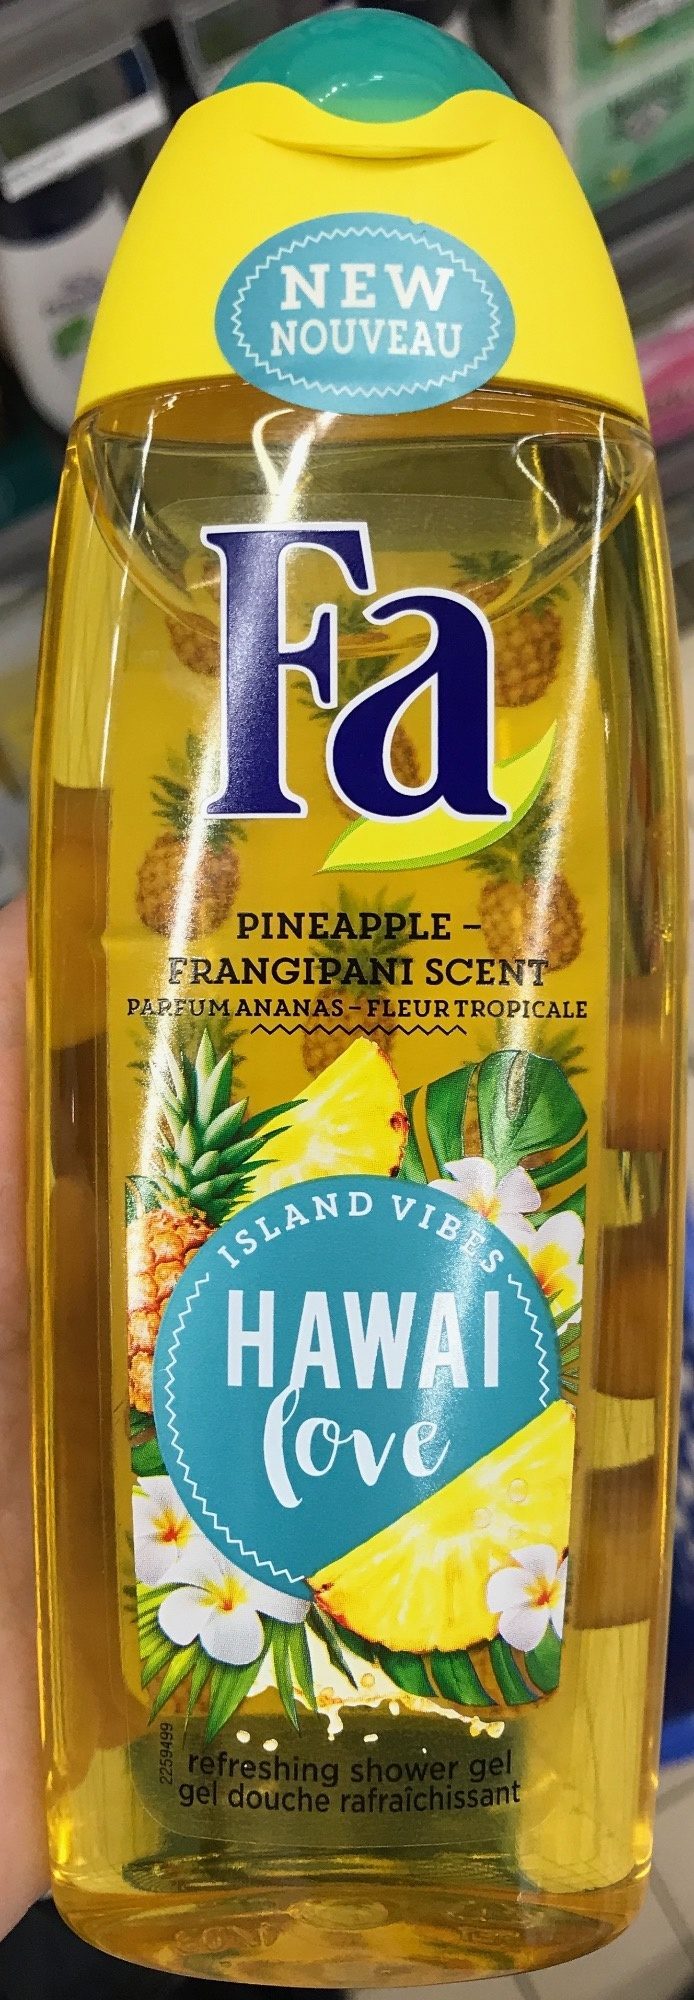 Island Vibes Hawai Love parfum Ananas Fleur Tropicale - Product - fr